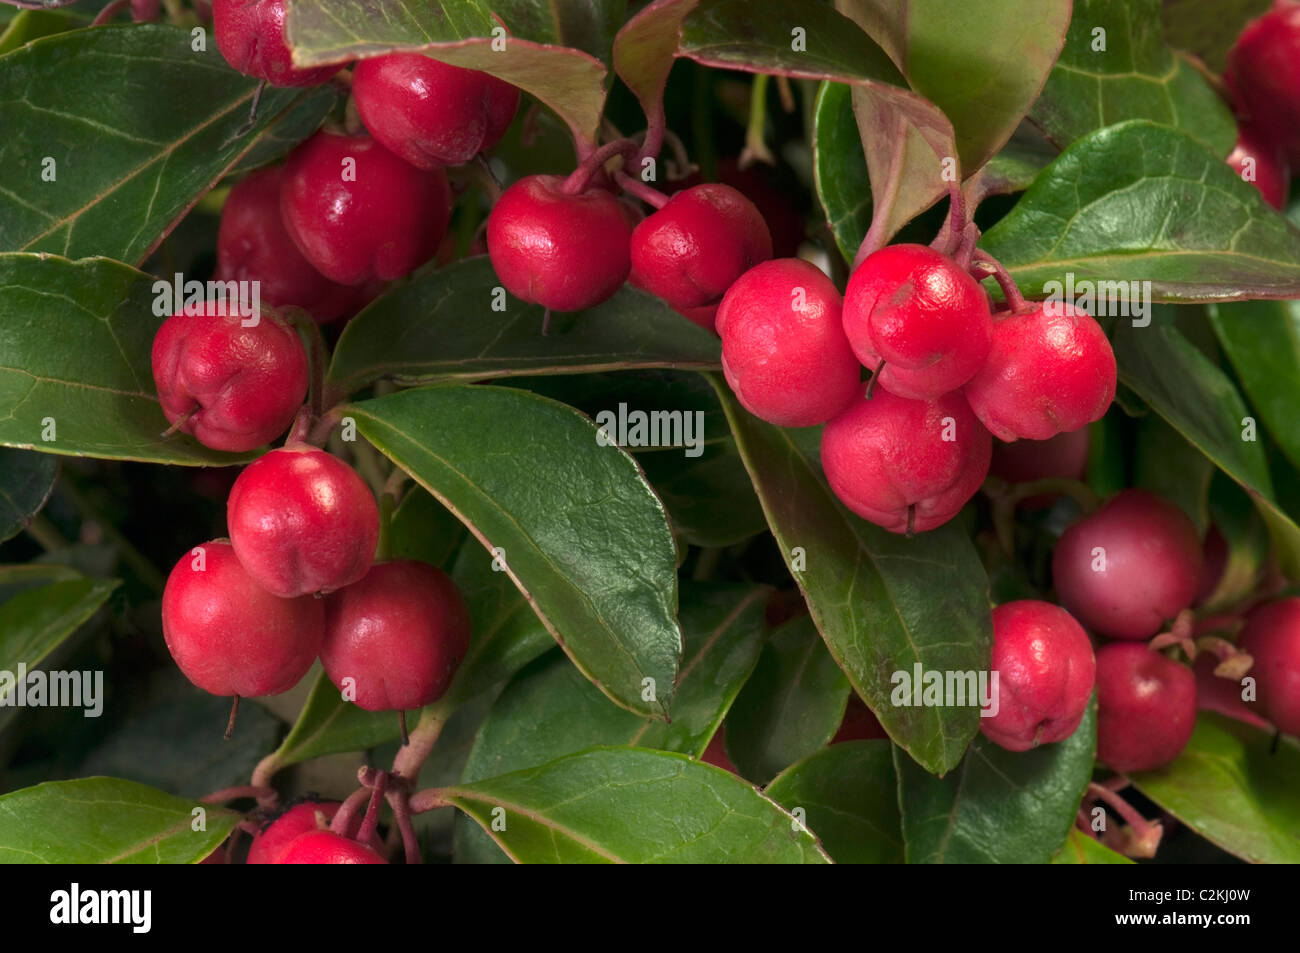 Teaberry orientale, American wintergreen (Gaultheria procumbens). Pianta  con frutti maturi rossi Foto stock - Alamy